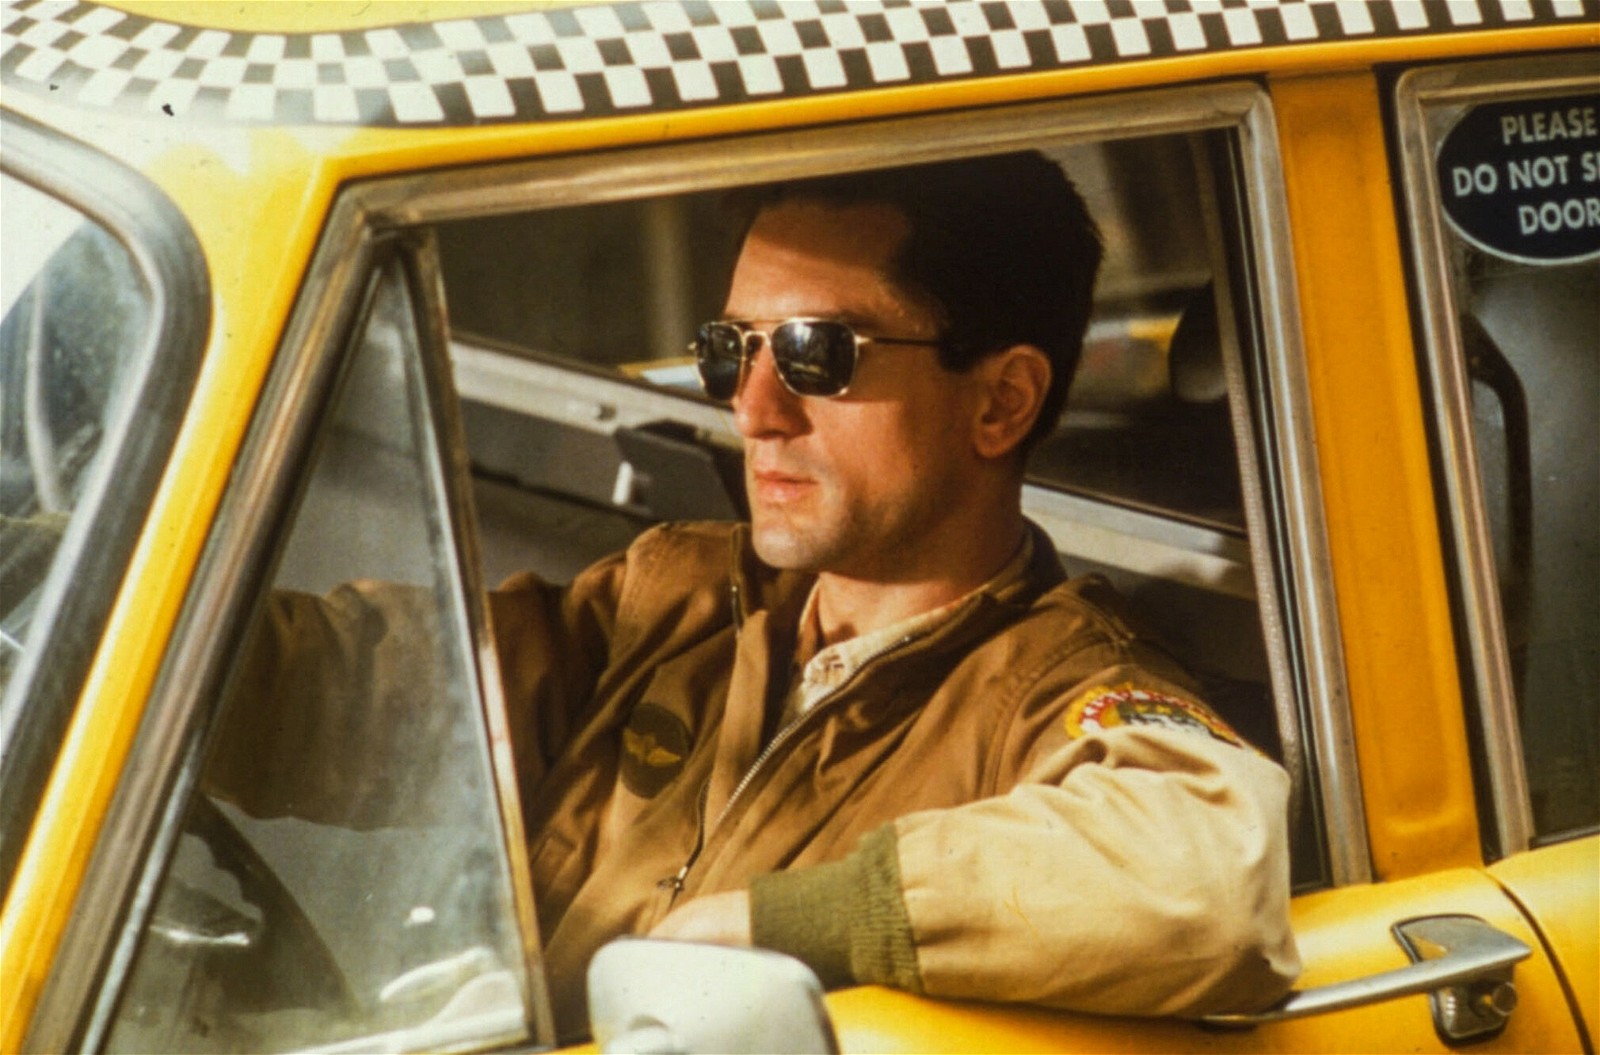 Robert De Niro in The Taxi Driver